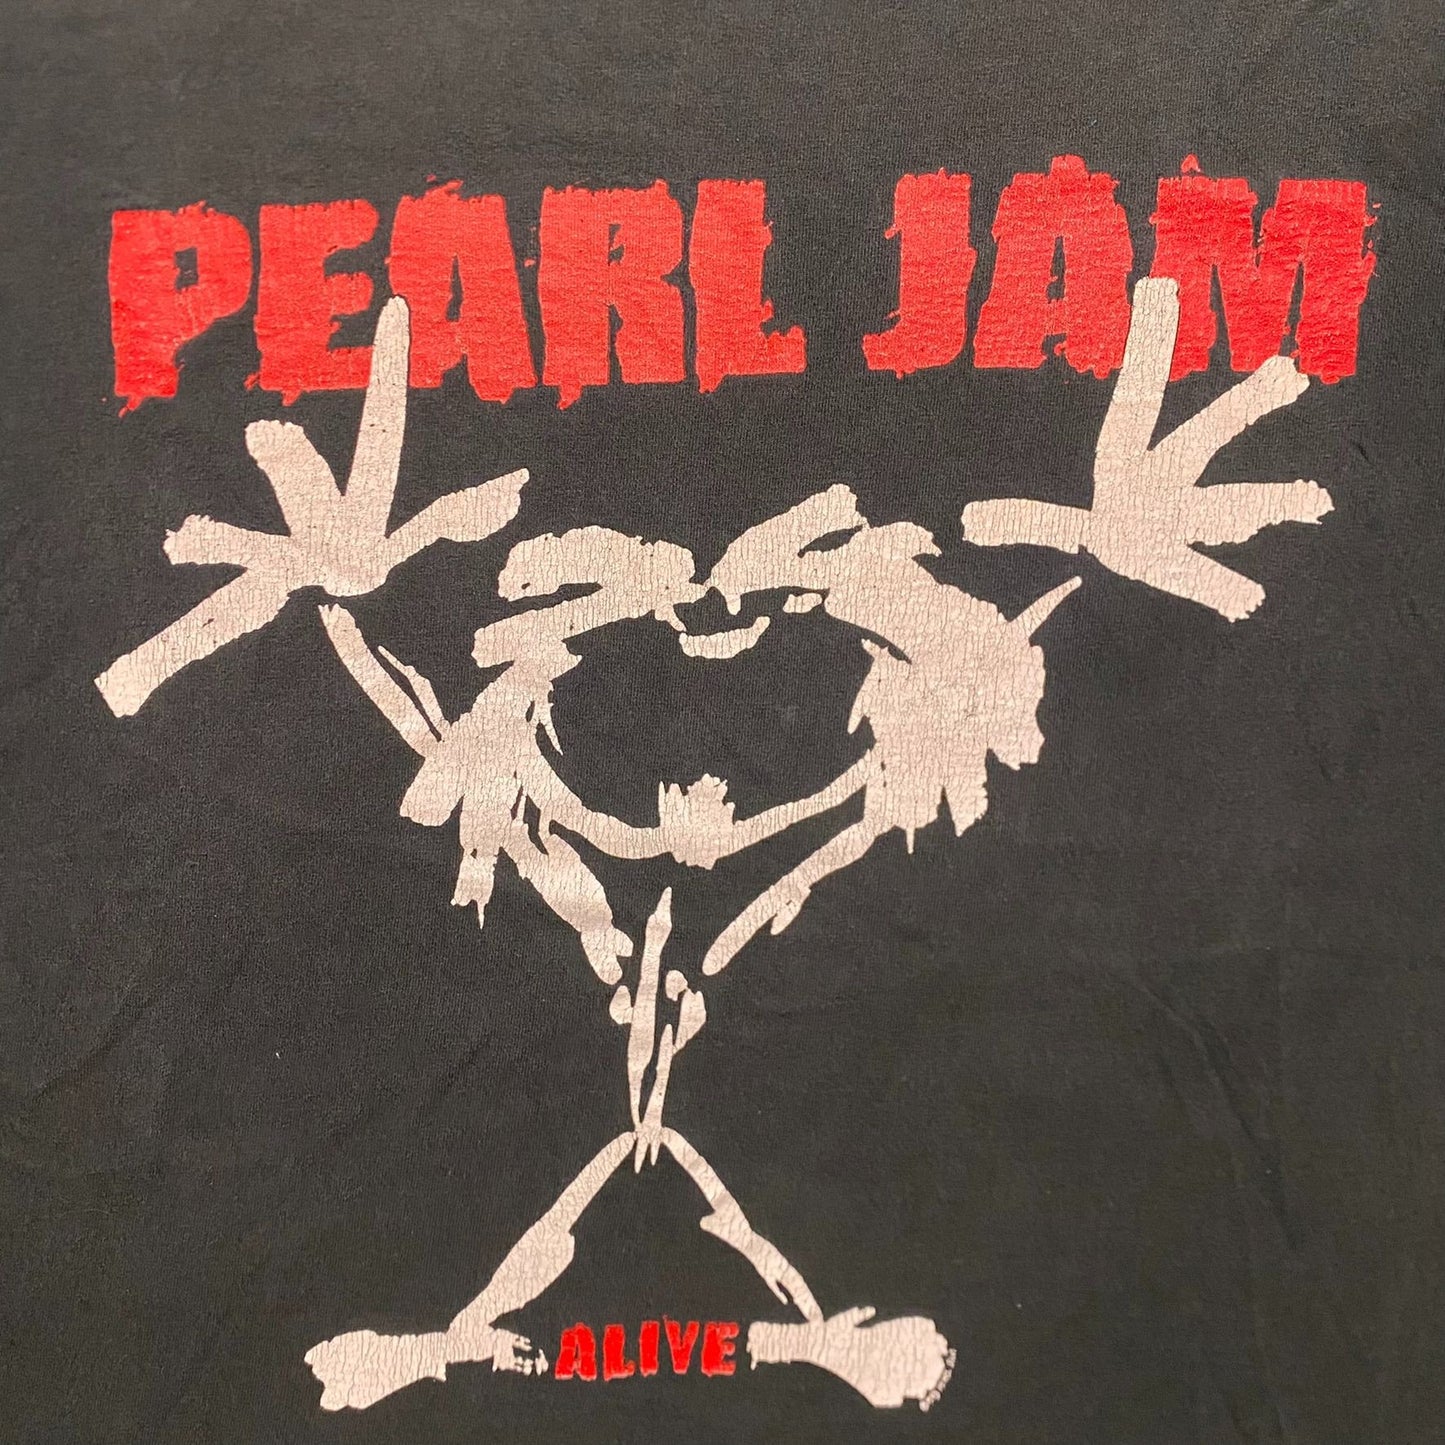 Vintage 90s Essential Pearl Jam Alive Grunge Band T-Shirt